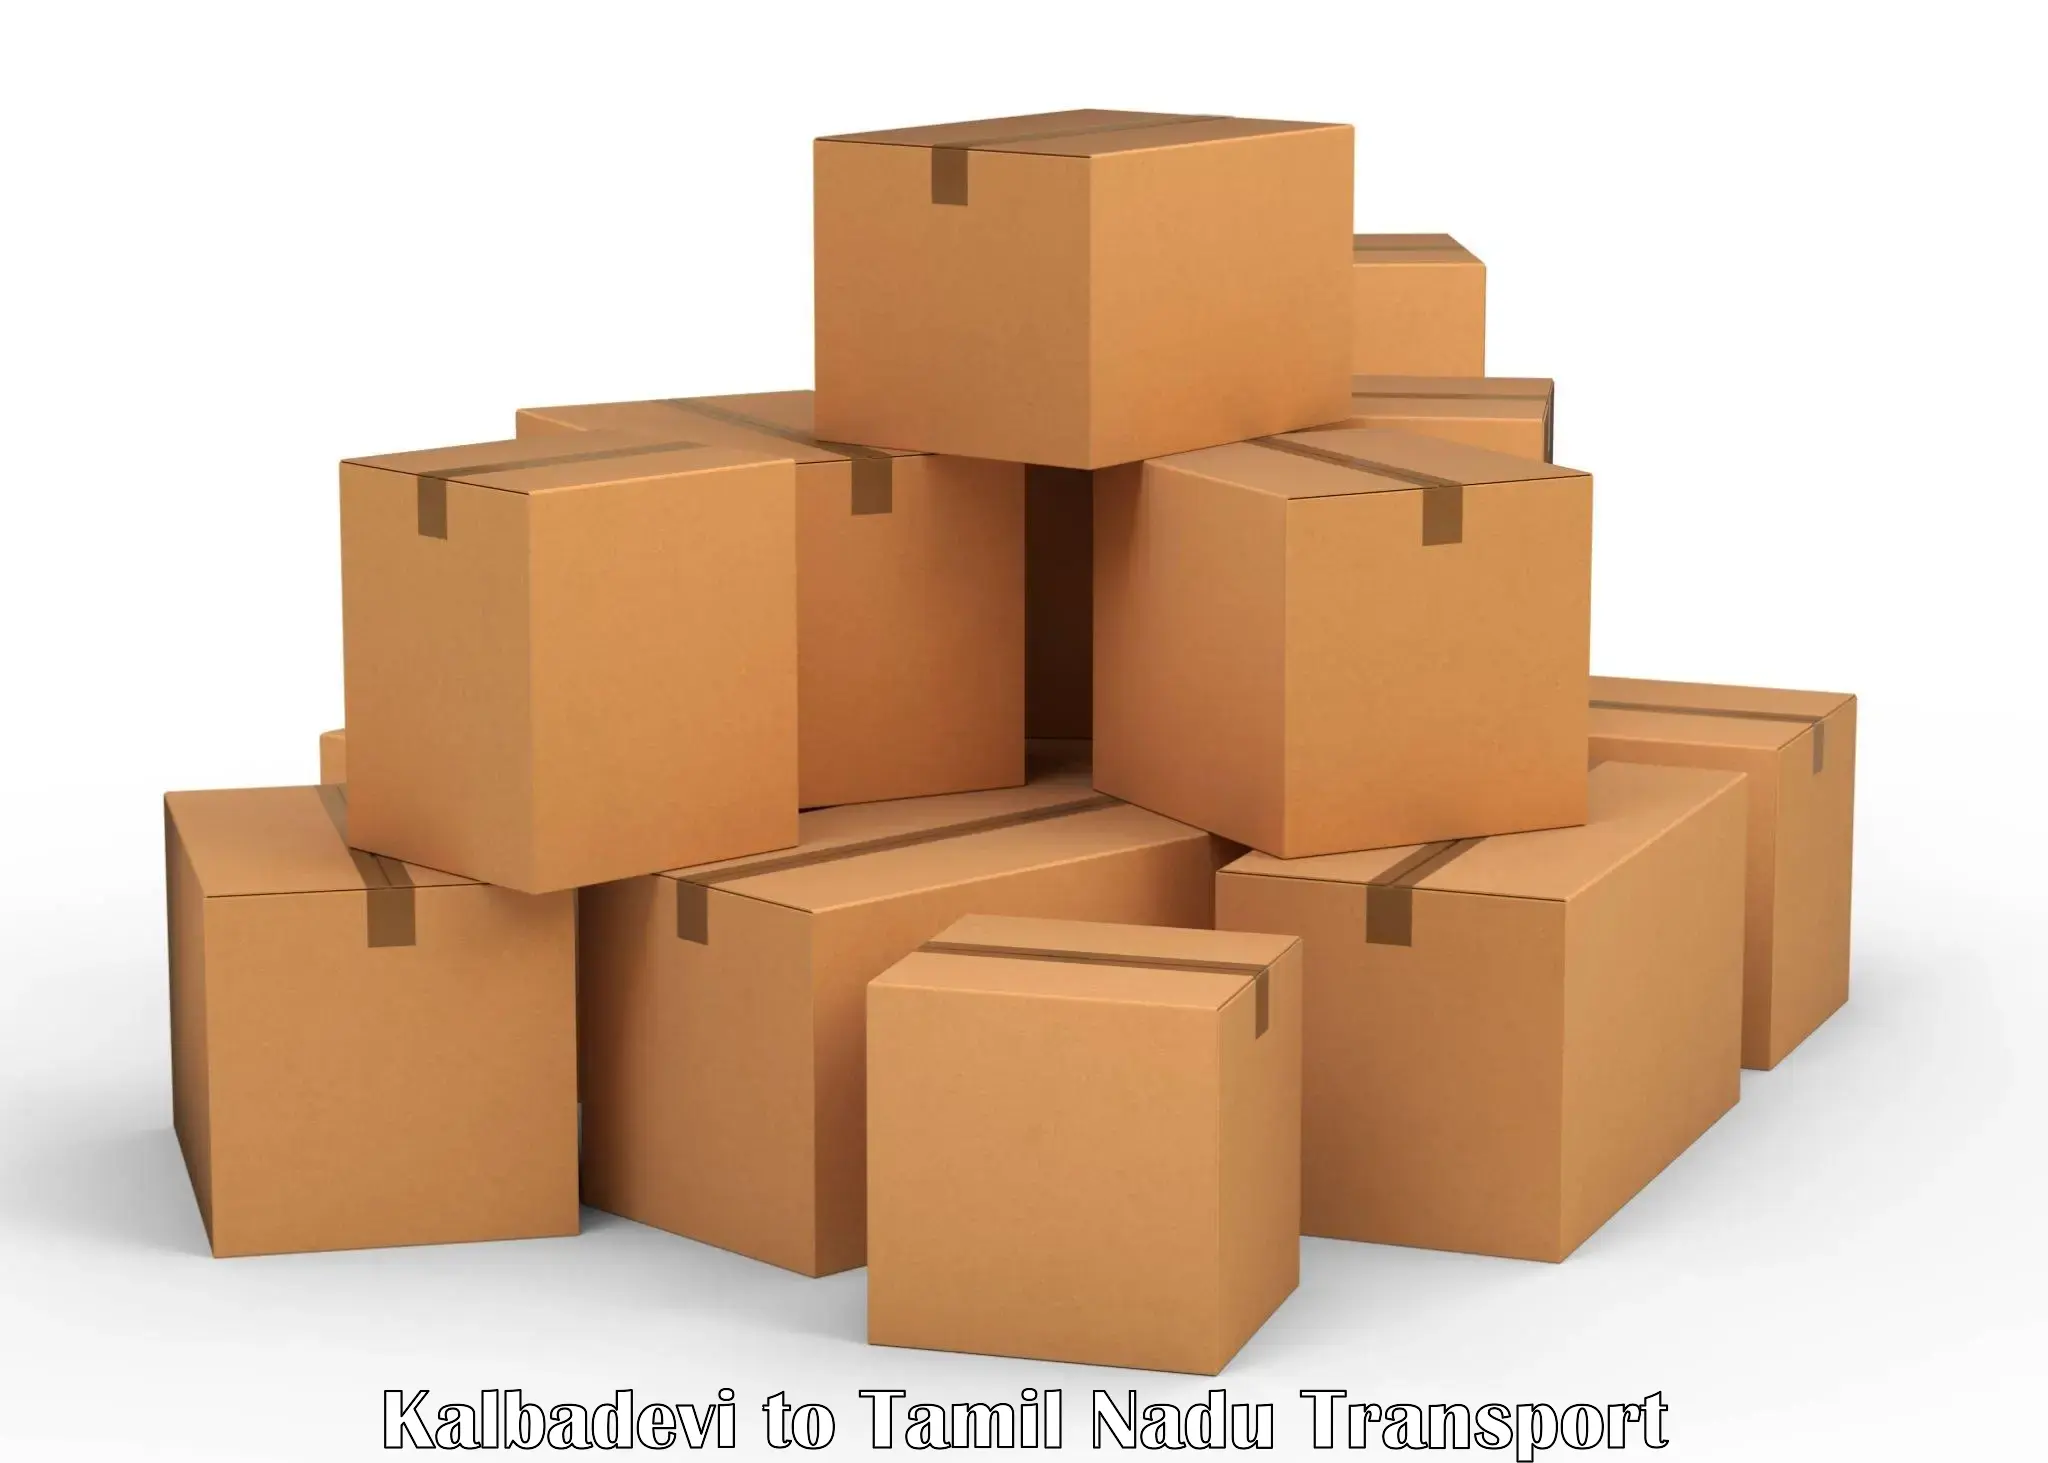 Transport in sharing Kalbadevi to Sriperumbudur